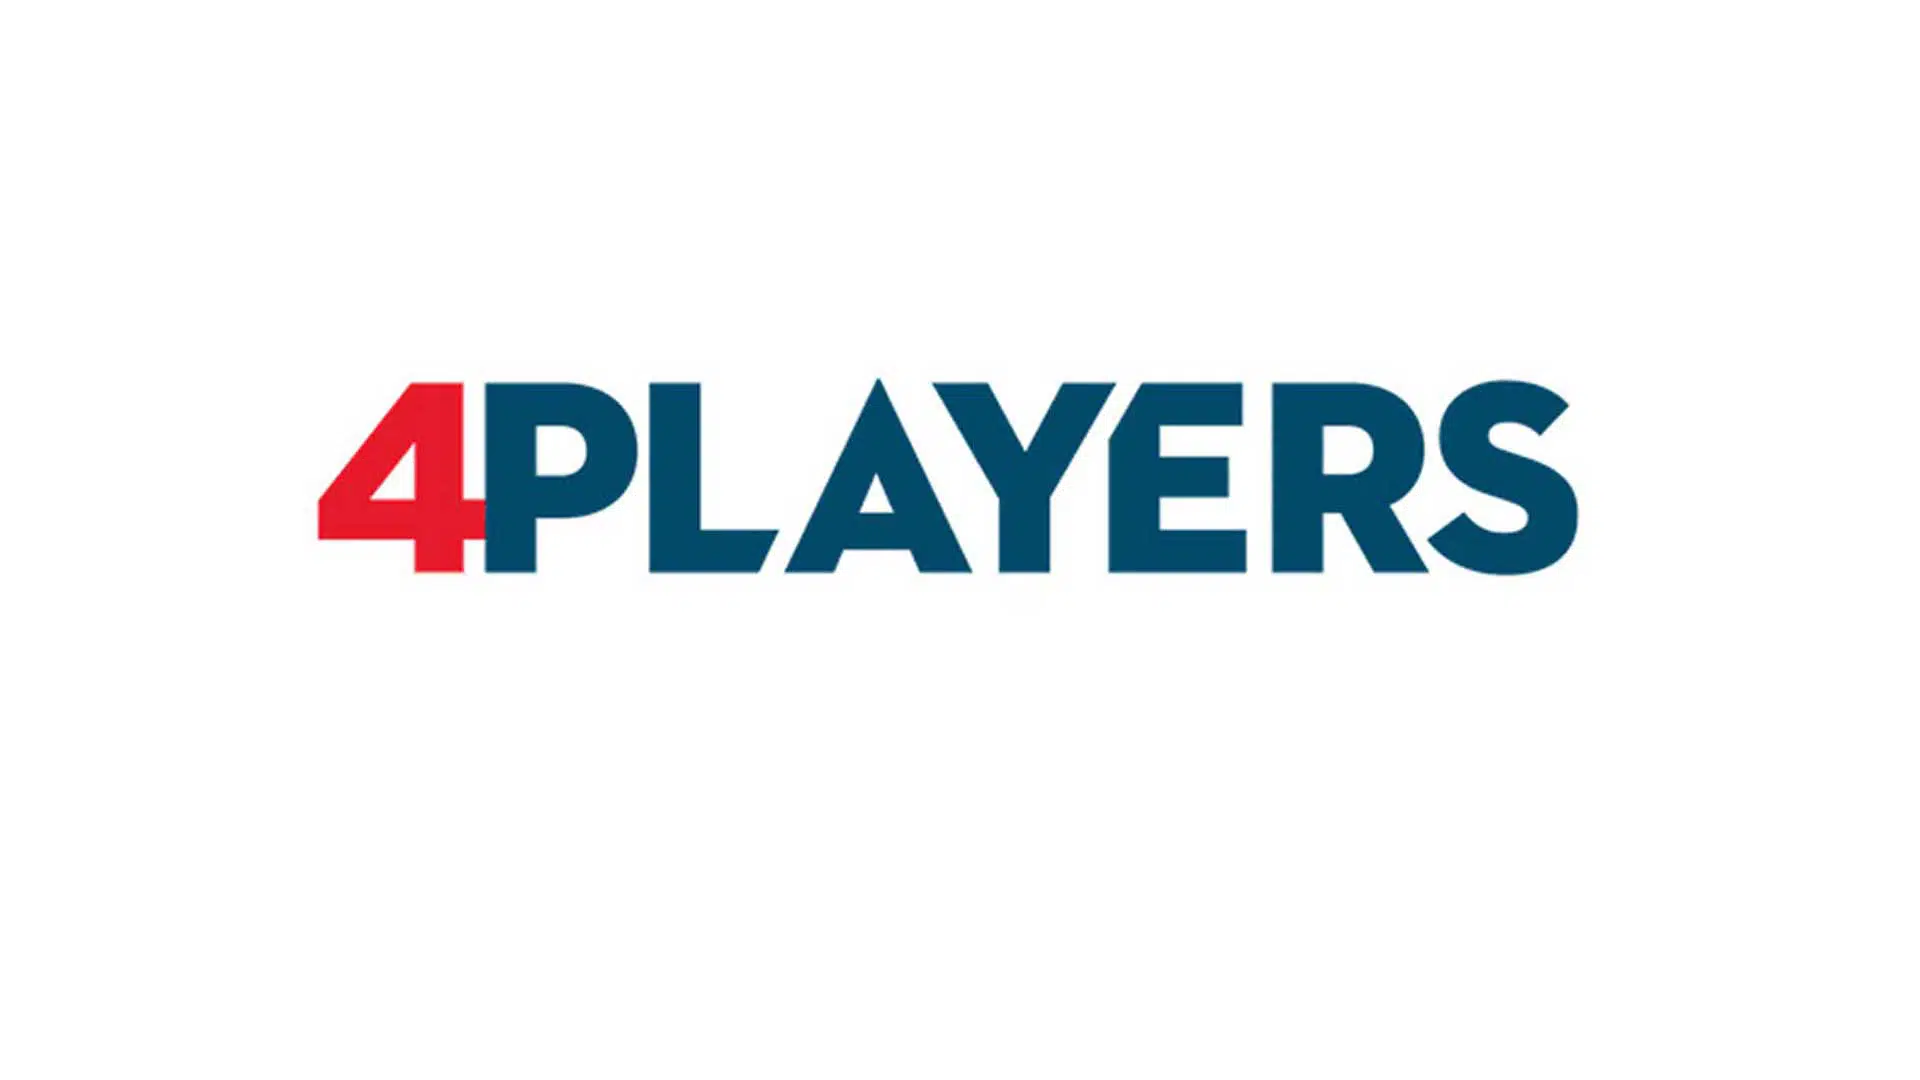 4players logo